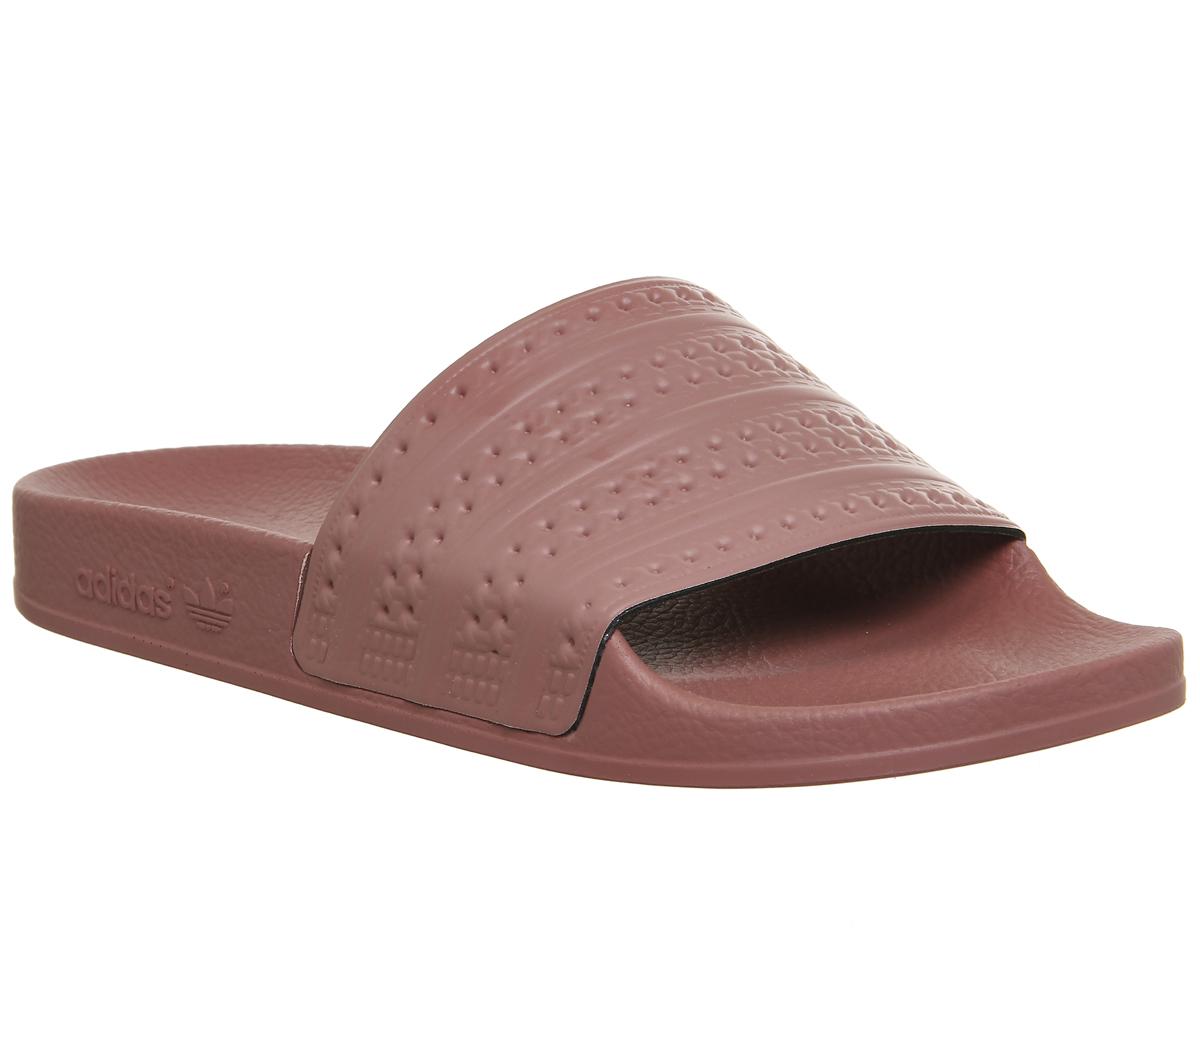 adidas sandals pink